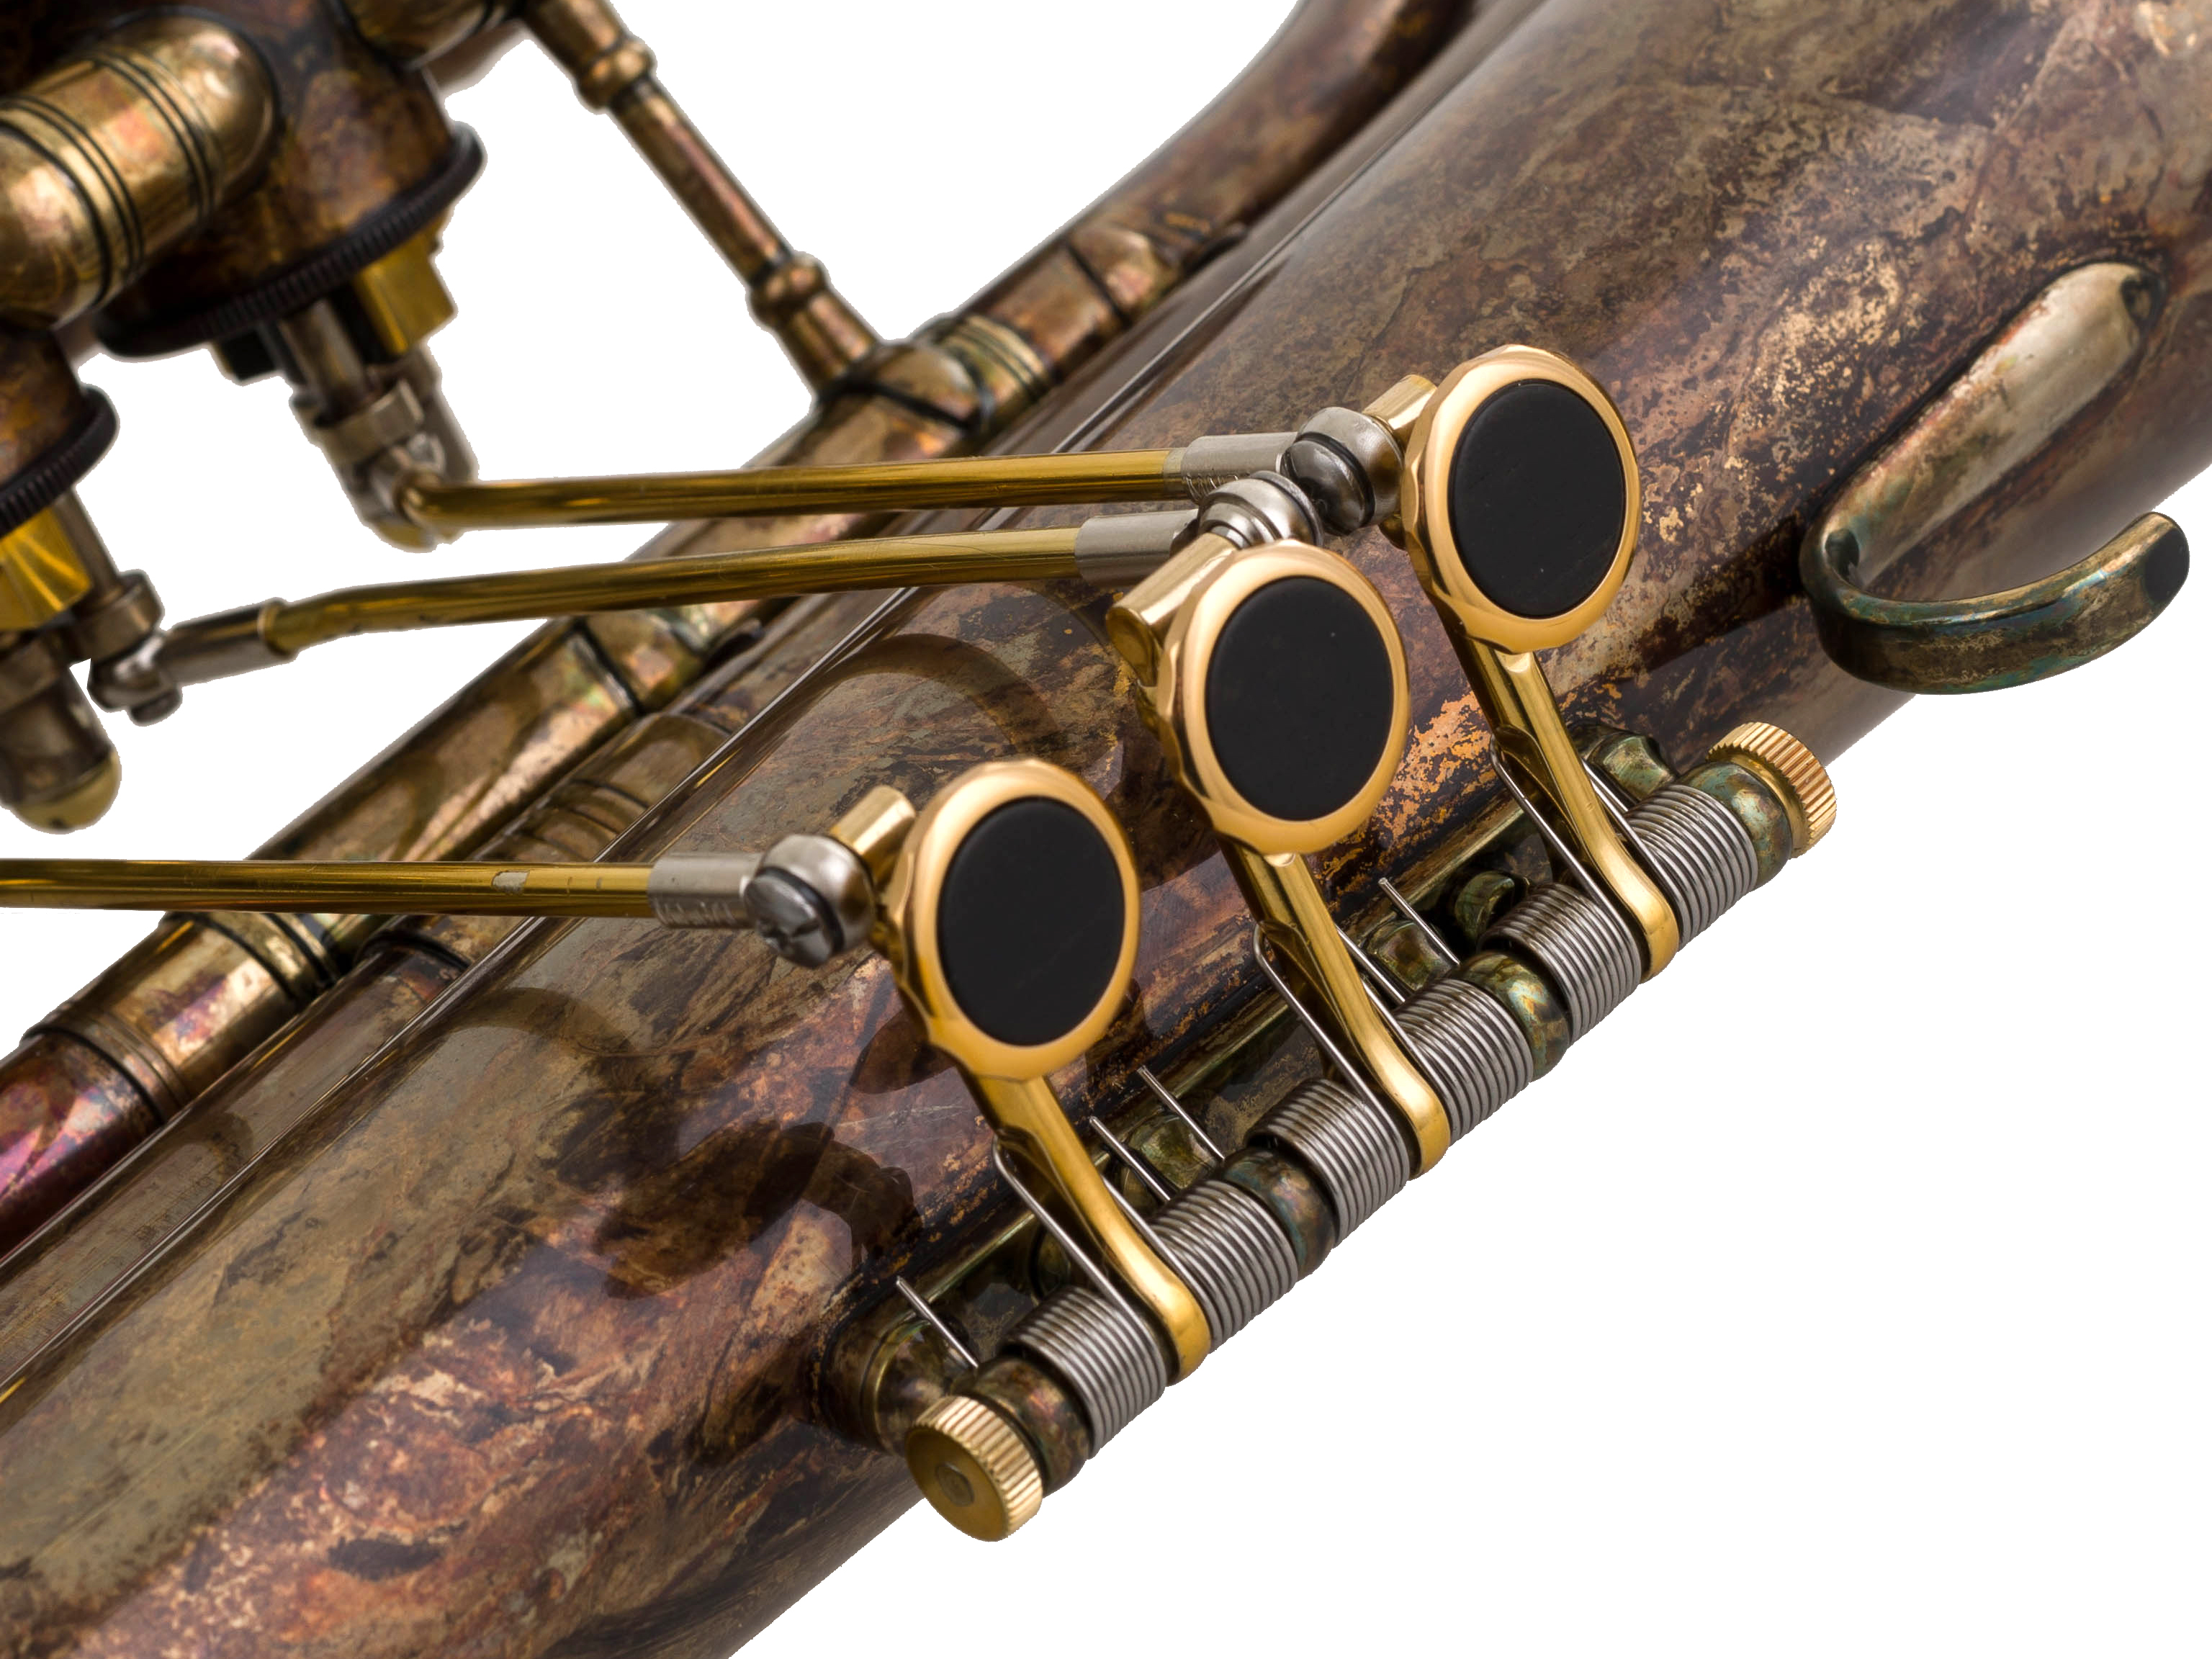 Krinner Basstrompete Goldmessing vertikal Antik-Lack